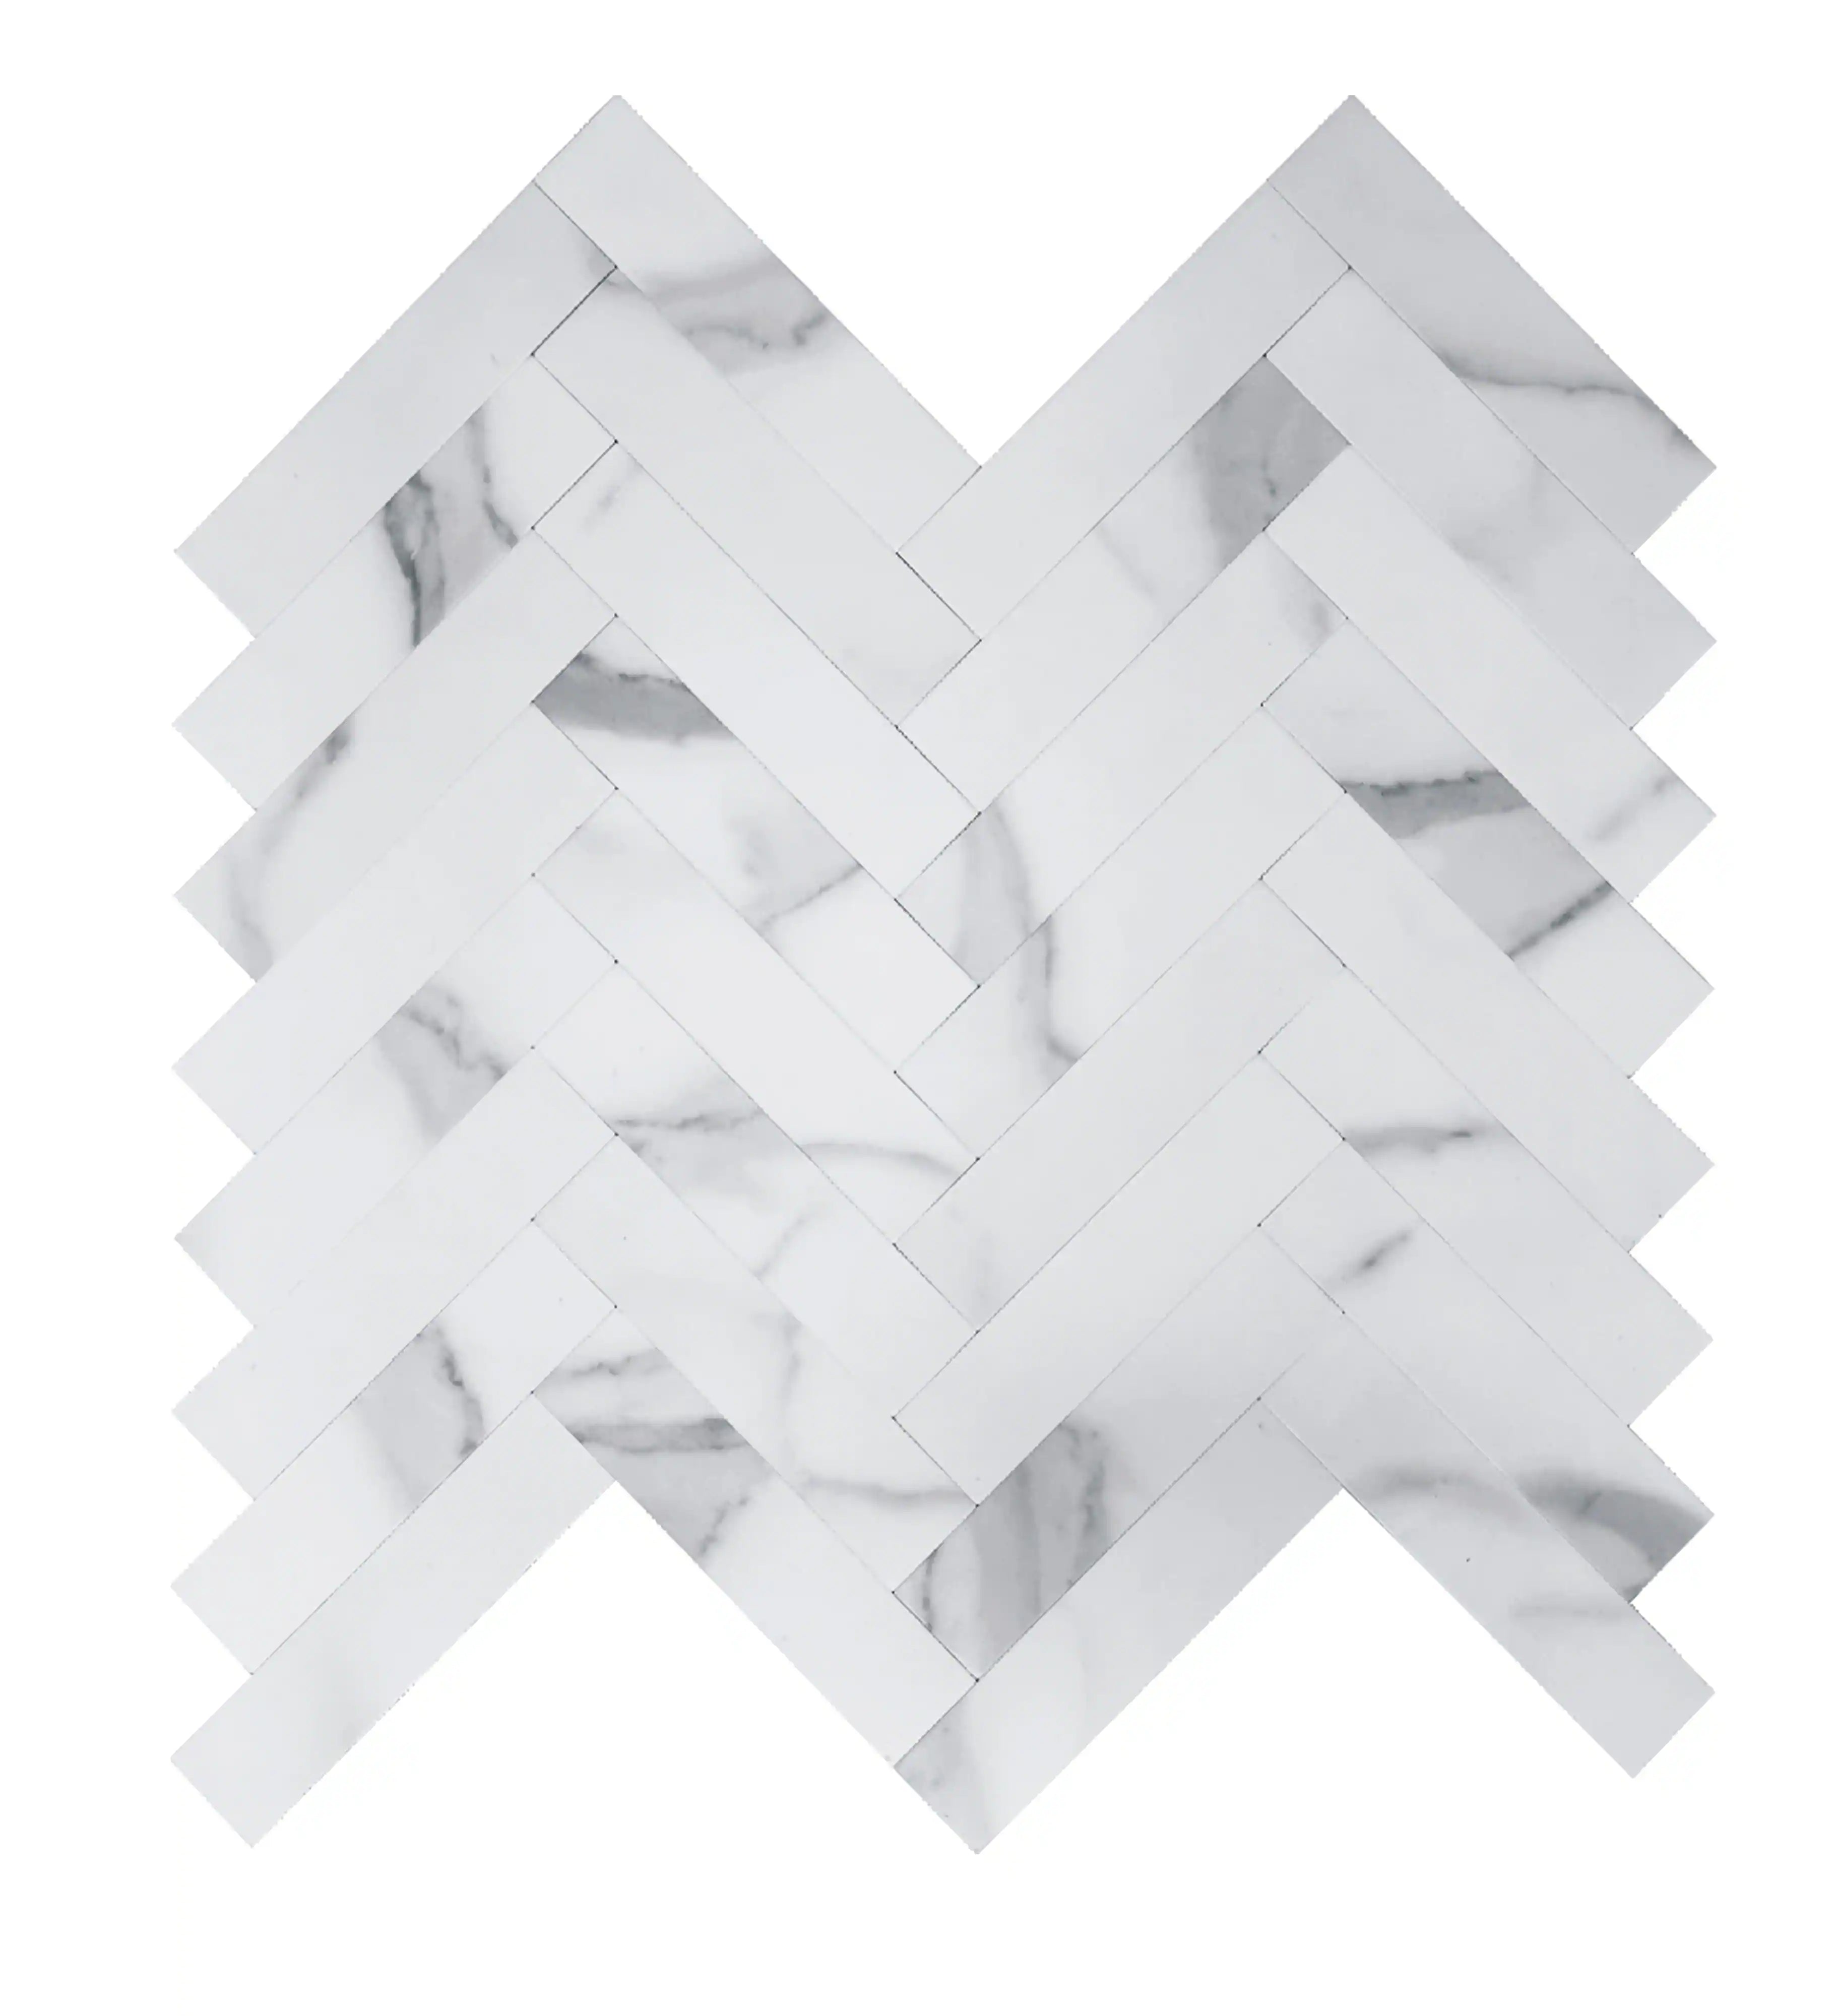 Colamo Thick Carrara White Herringbone Peel and Stick Backsplash Marble Look Tiles